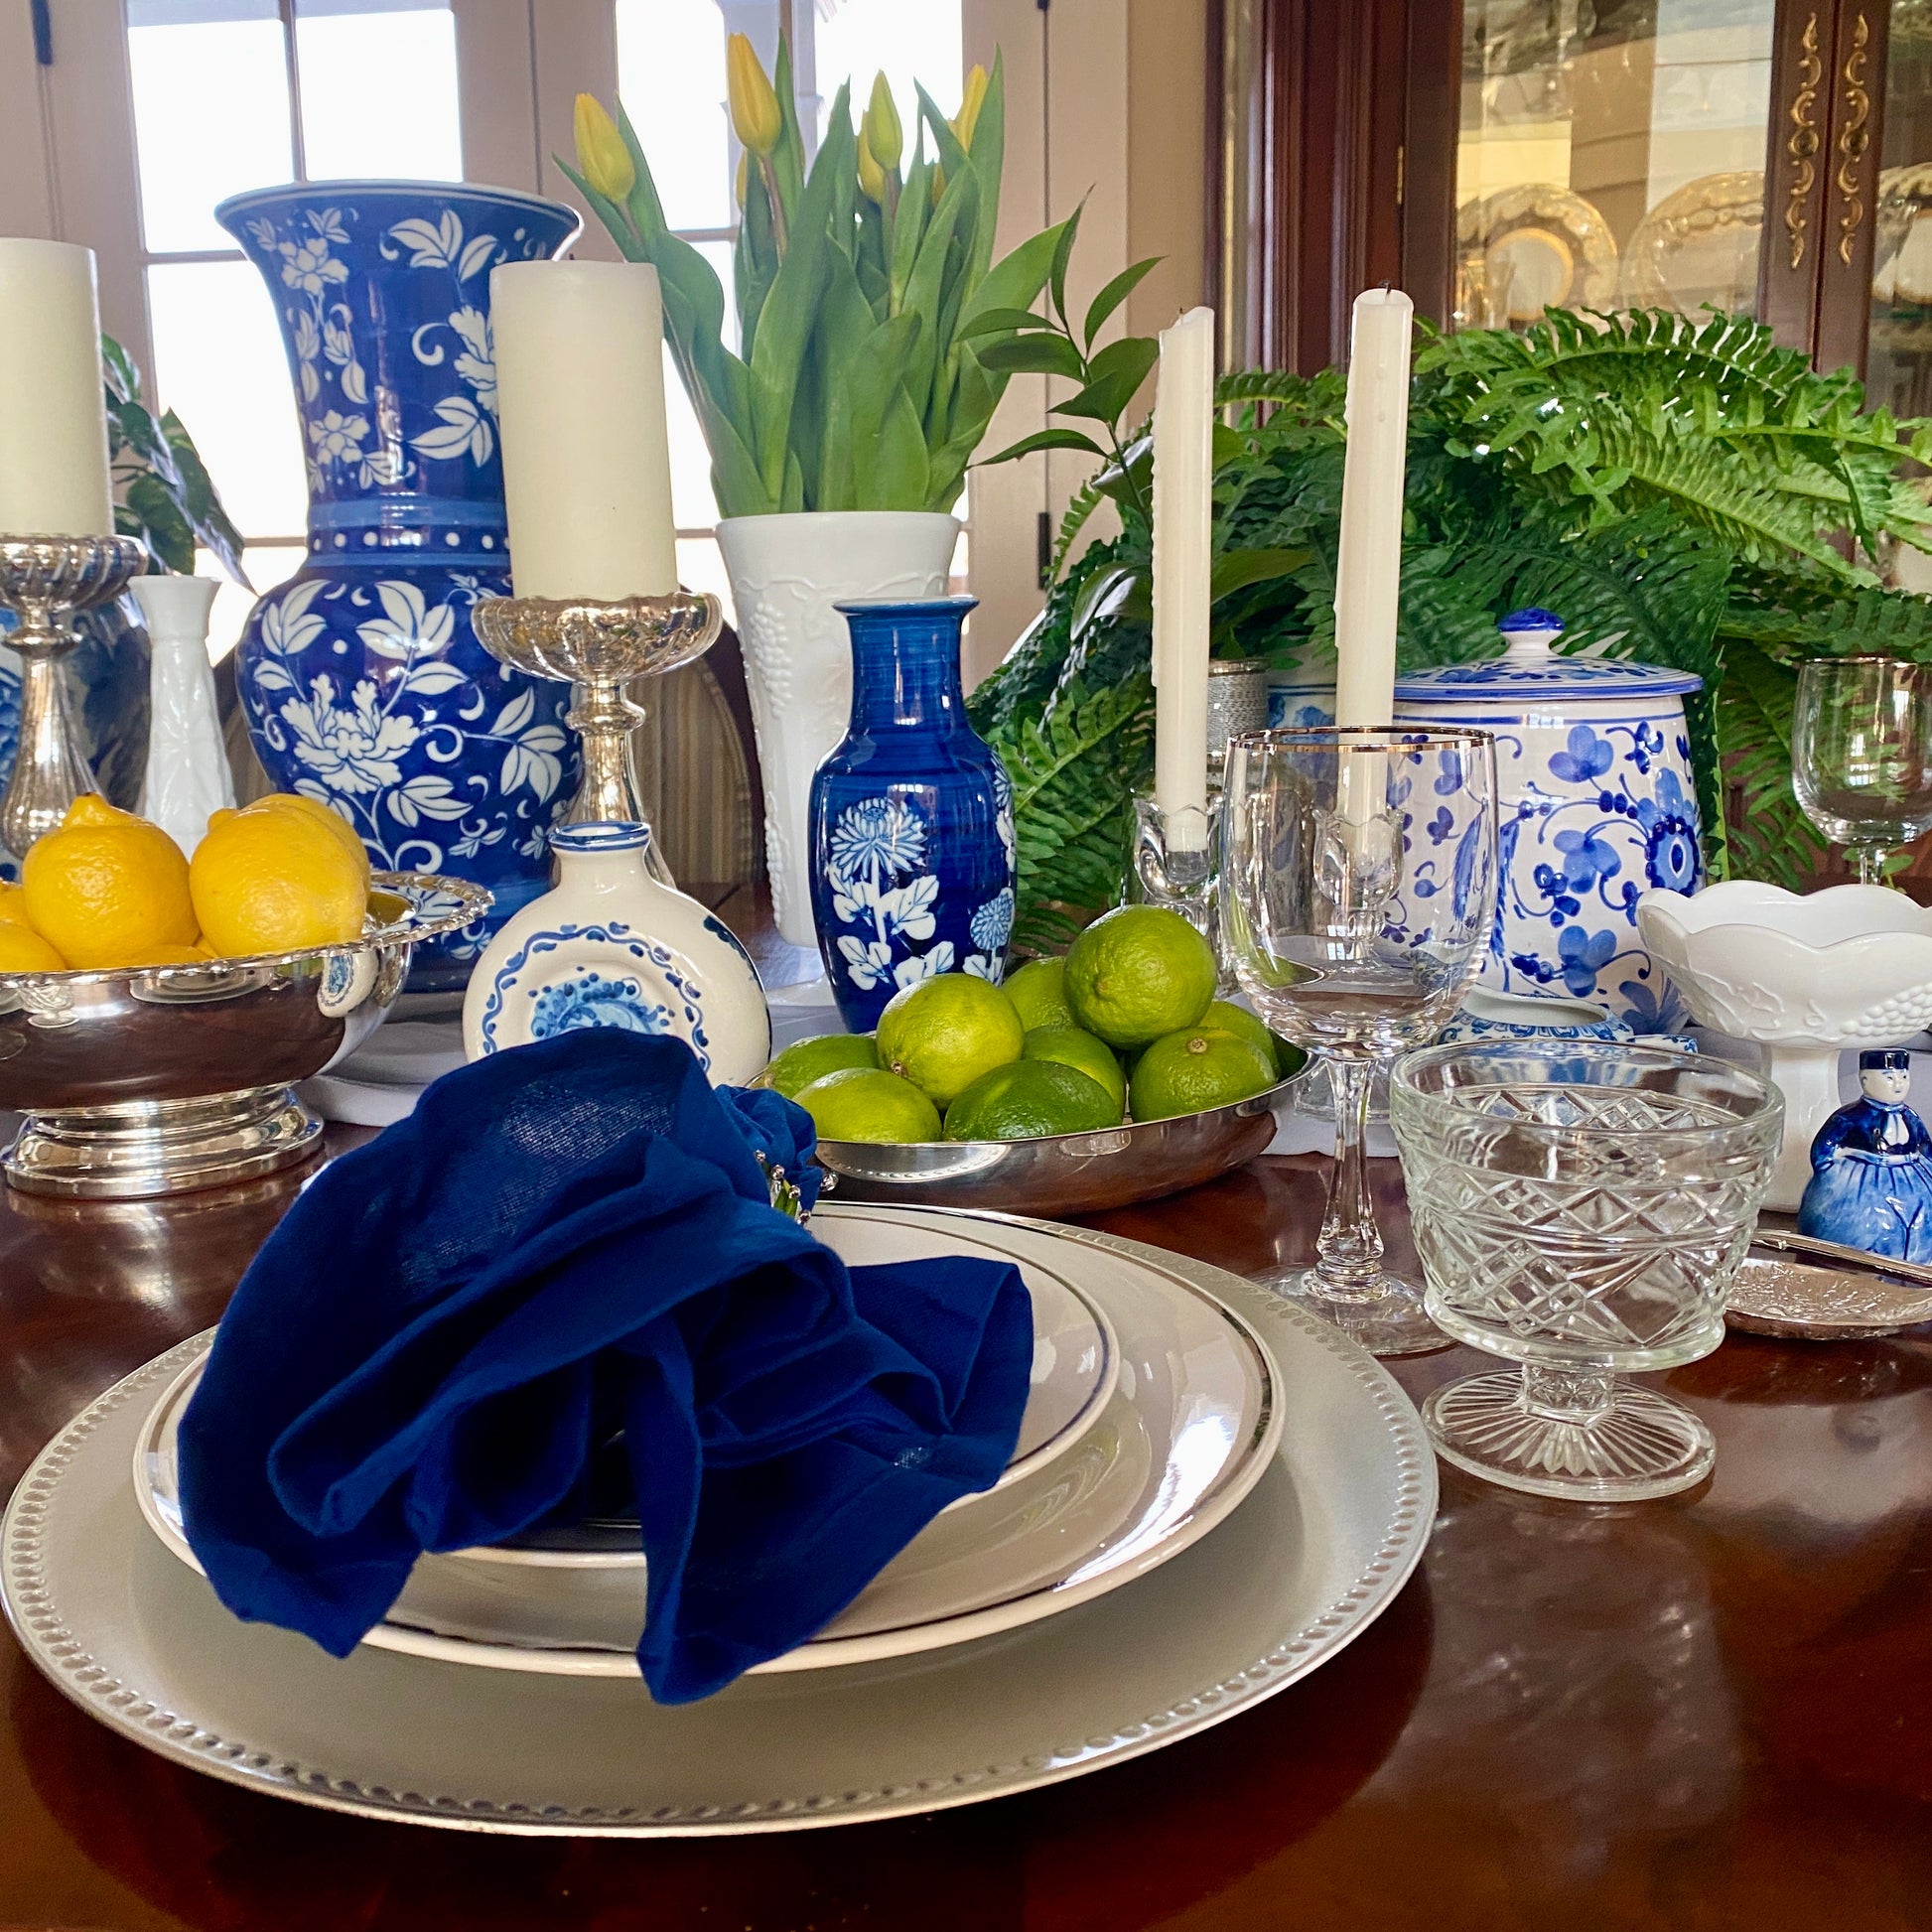 Vintage Blue Wine Glass, 4 Fostoria Glasses, Light Blue Glassware, Vintage  Fostoria Glassware, Fostoria Stemware, Blue Glass, Blue Stemware 